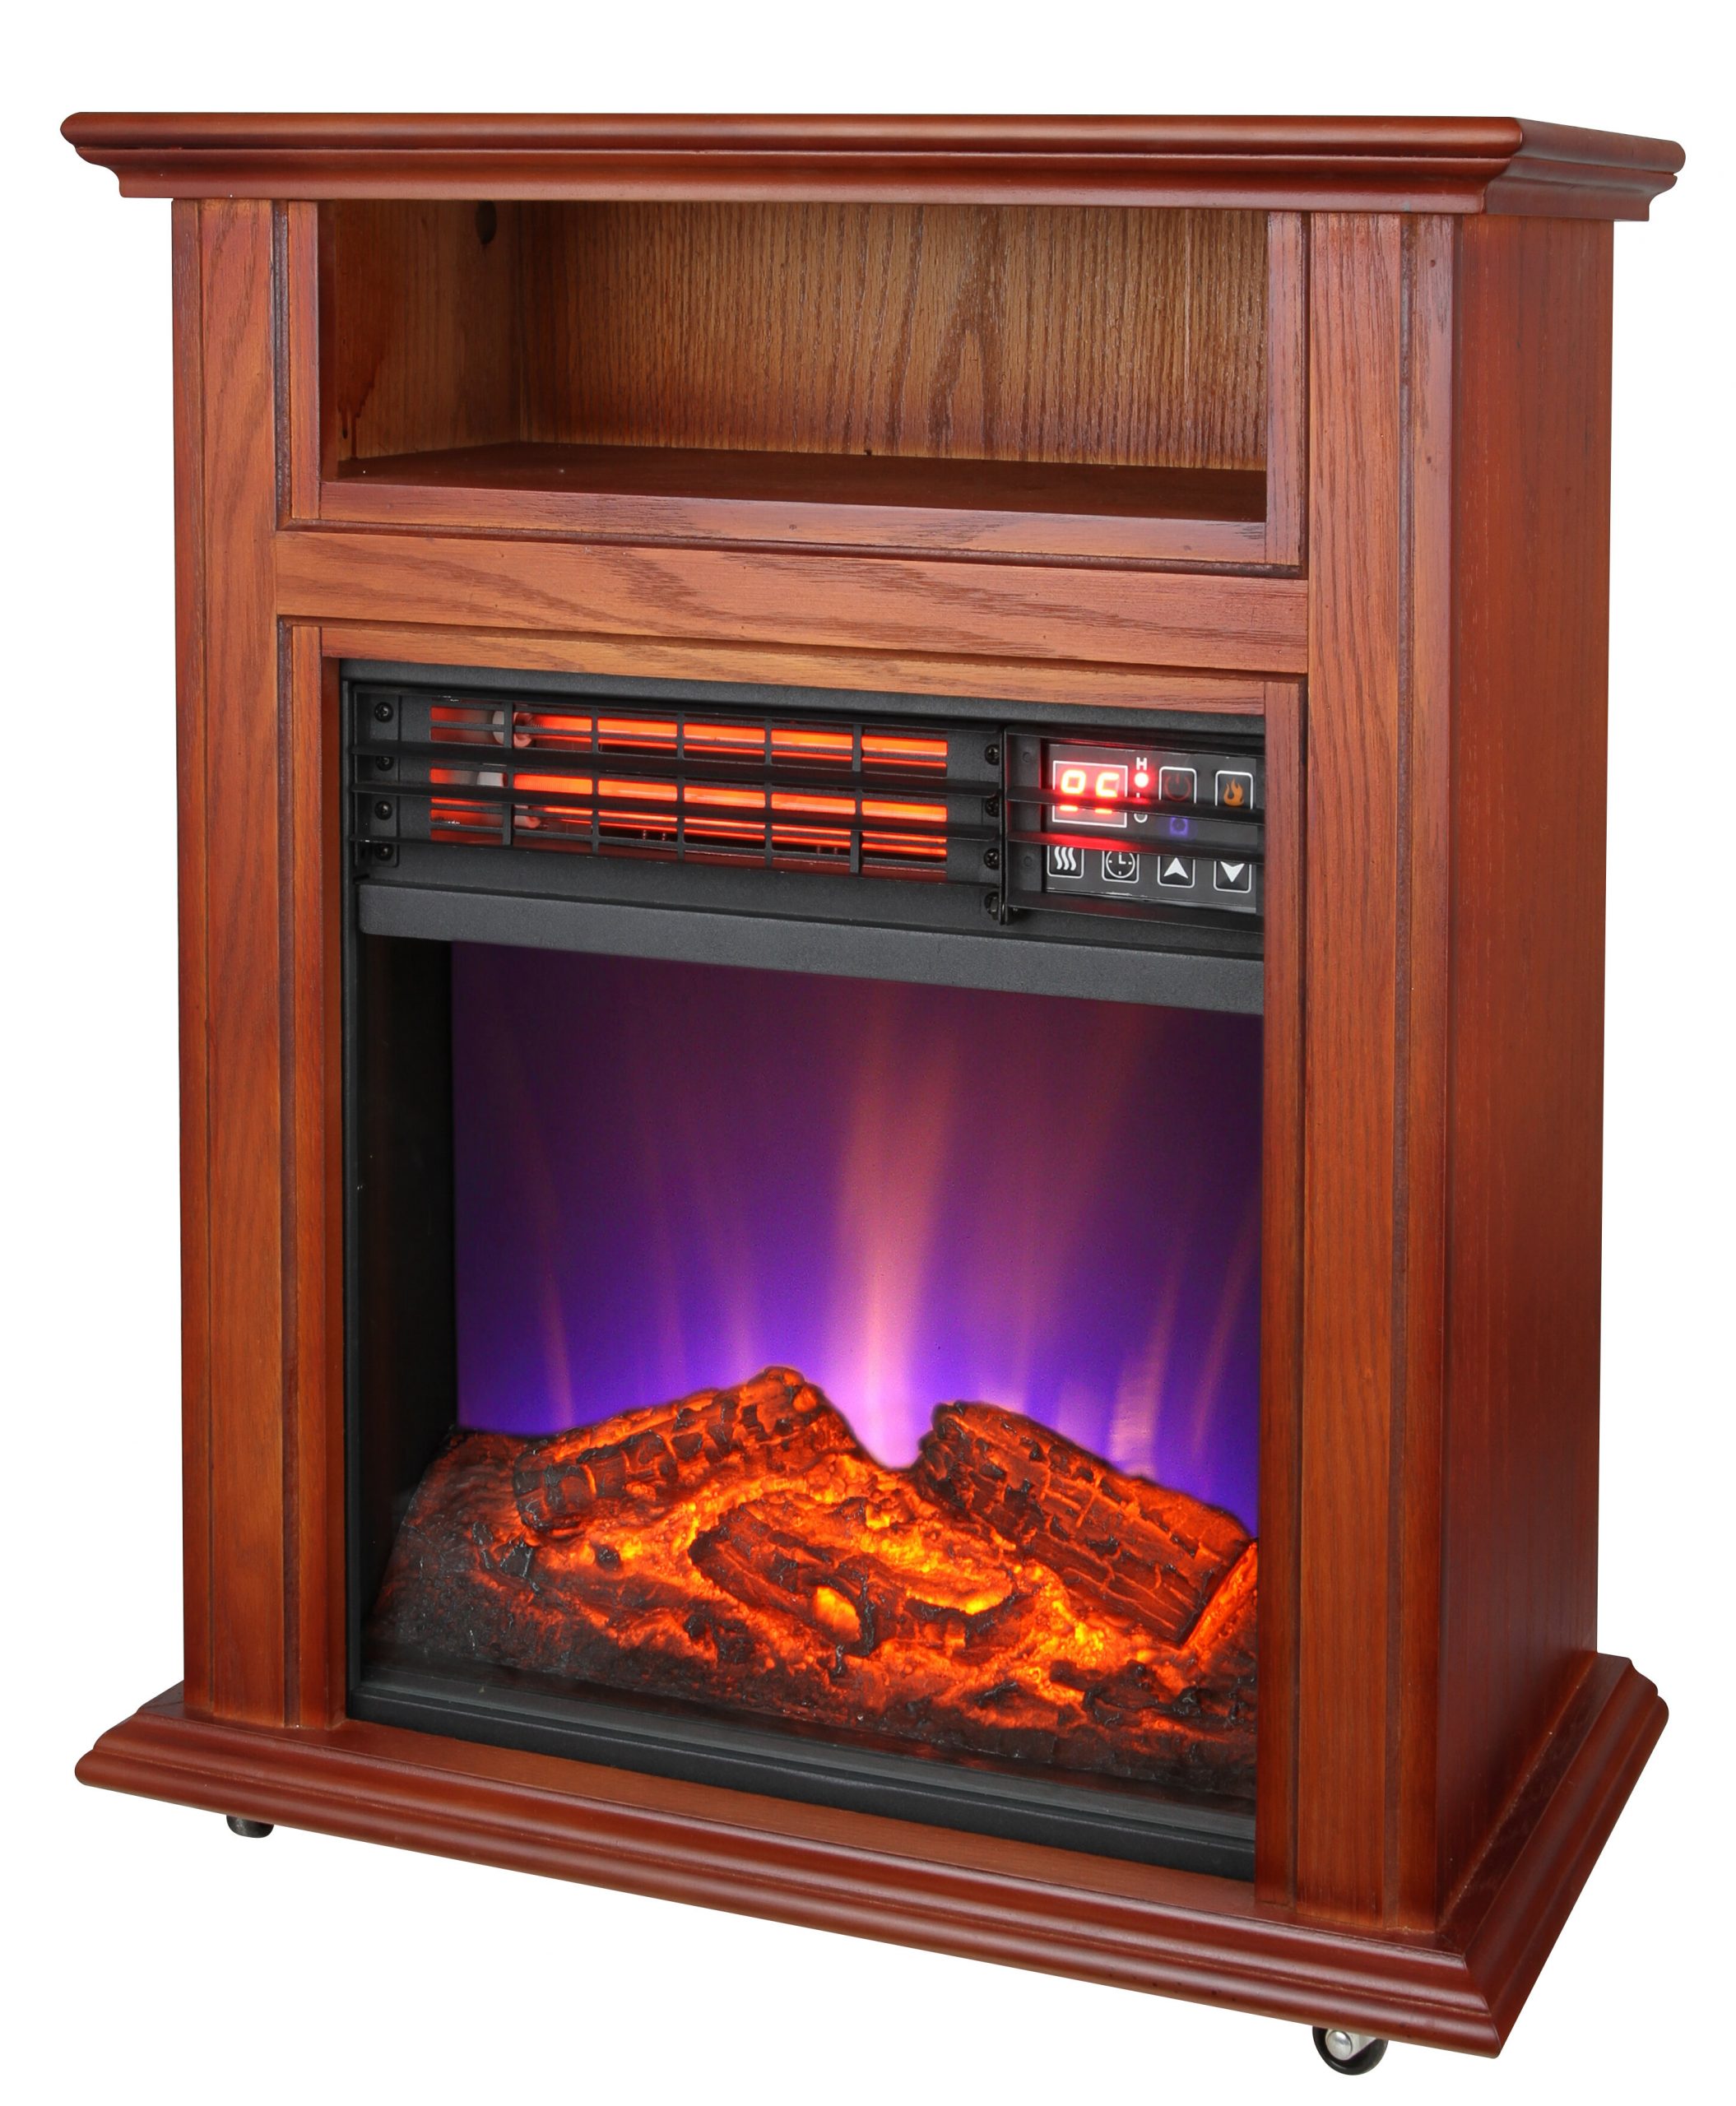 Wayfair Fireplace Screen Unique Pelfrey Mobile Quartz Electric Fireplace